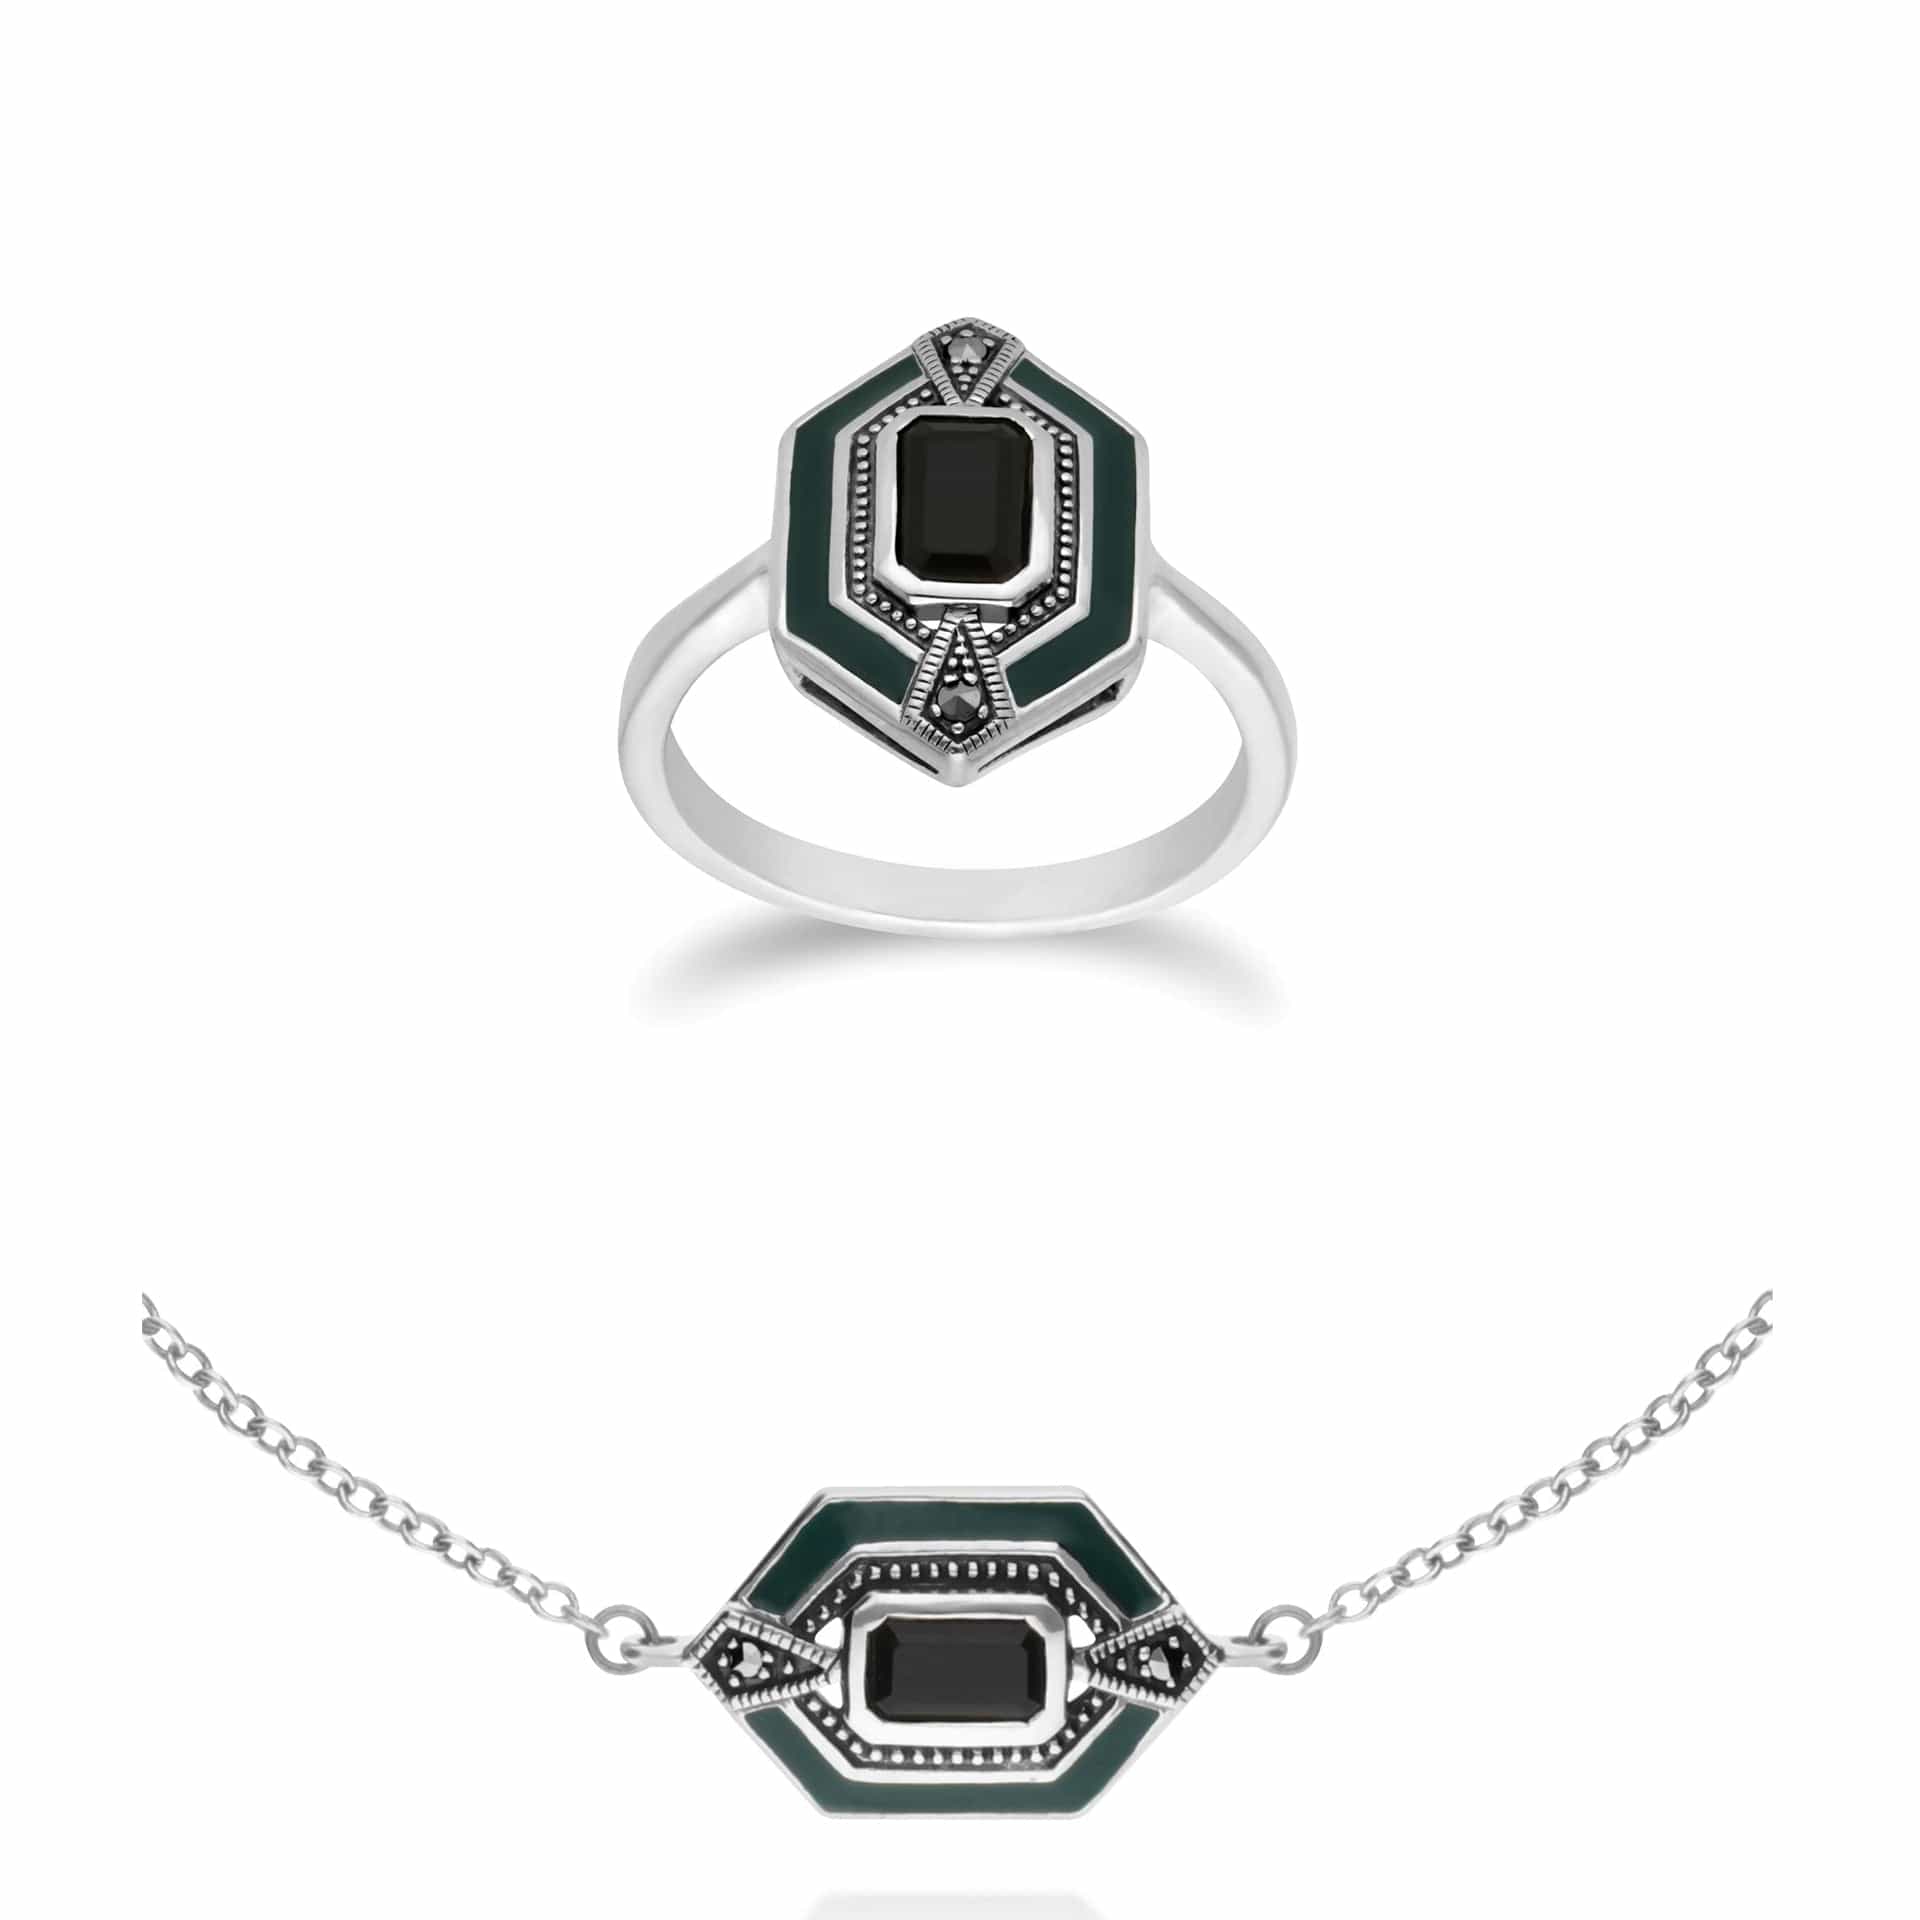 214L164504925-214R602604925 Art Deco Style Black Onyx, Marcasite & Green Enamel Hexagon Ring & Bracelet Set in 925 Sterling Silver 1